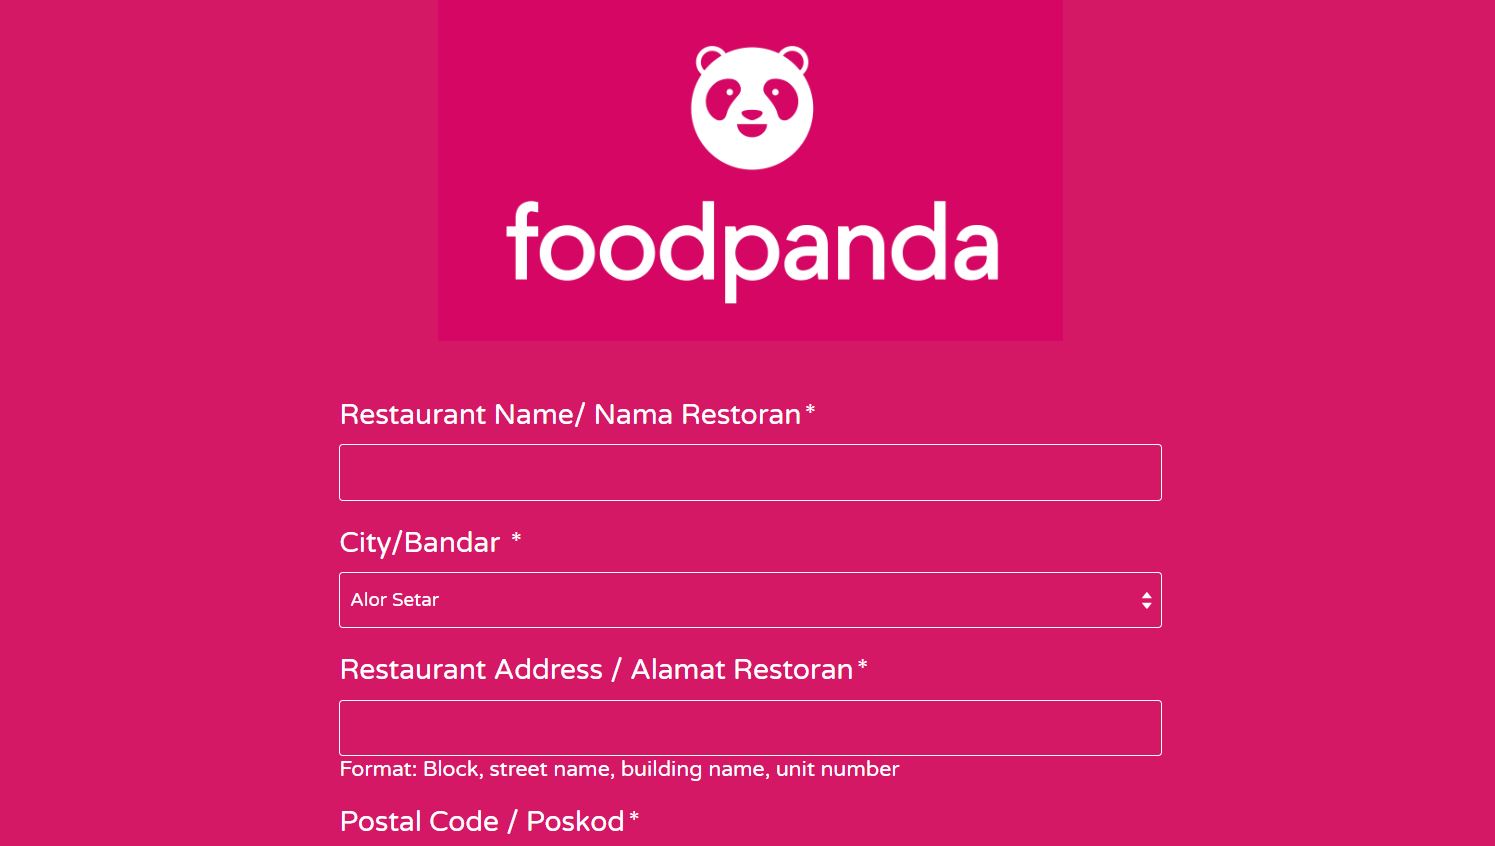 foodpanda application form